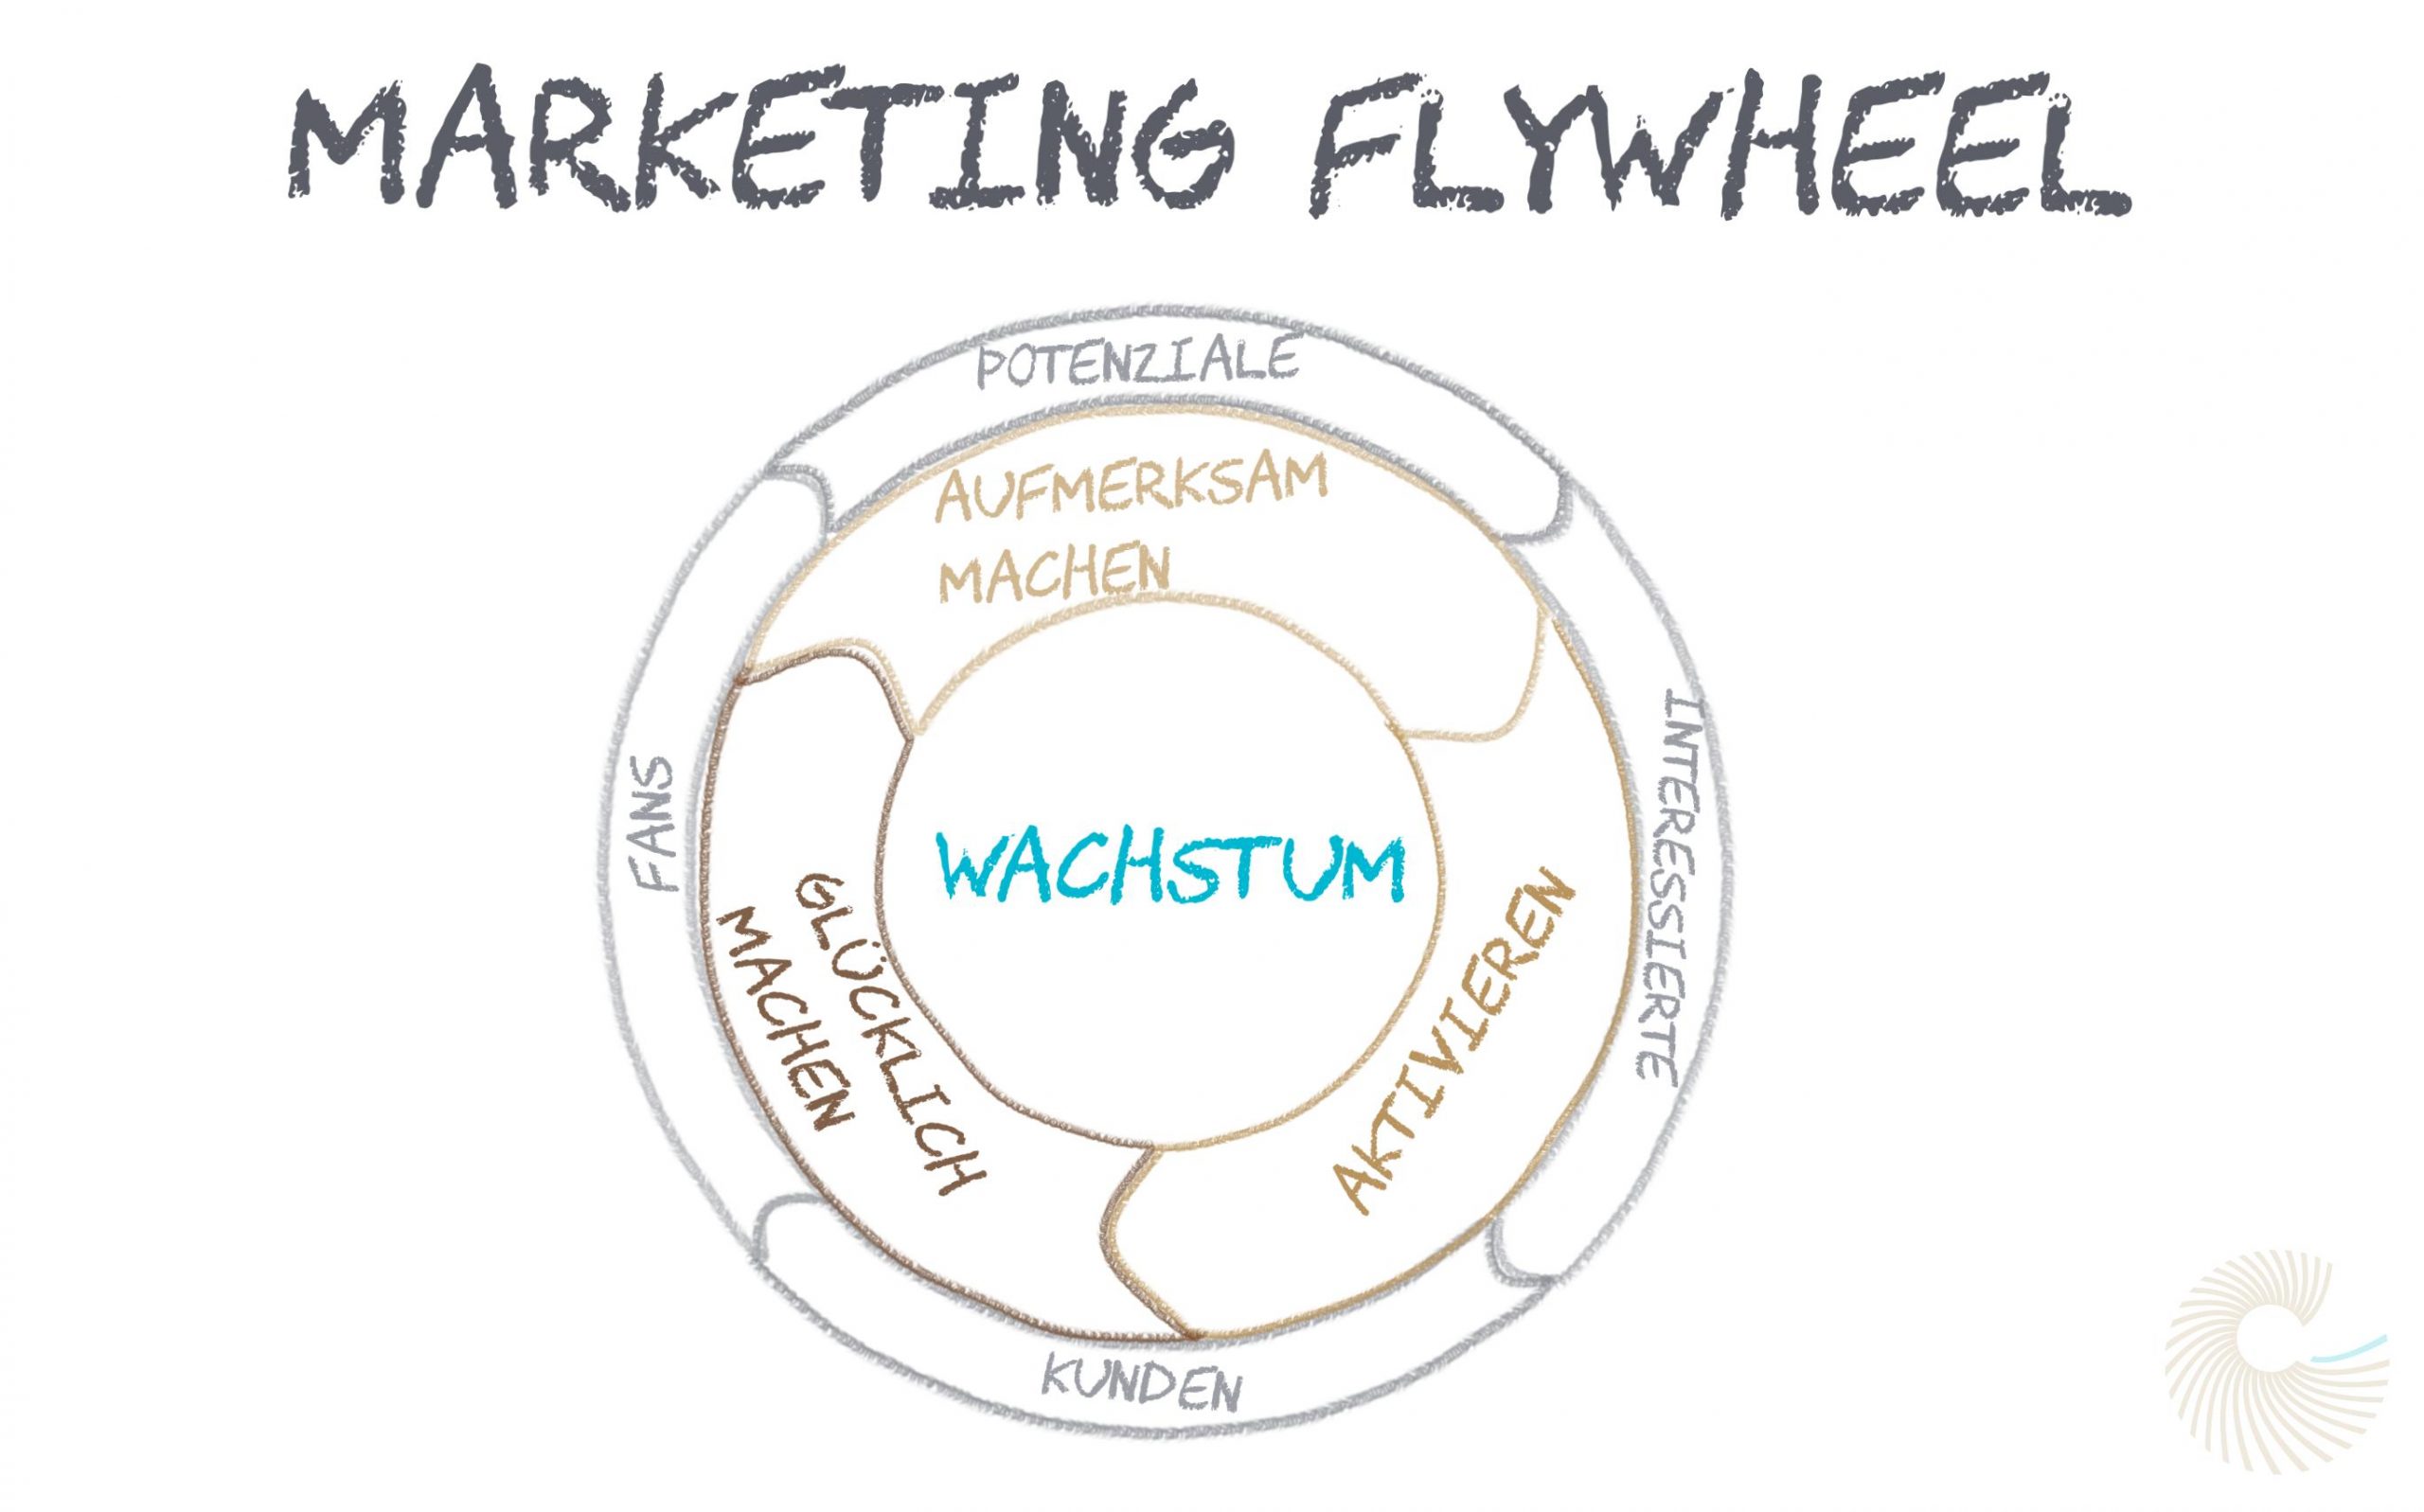 Marketing Flywheel